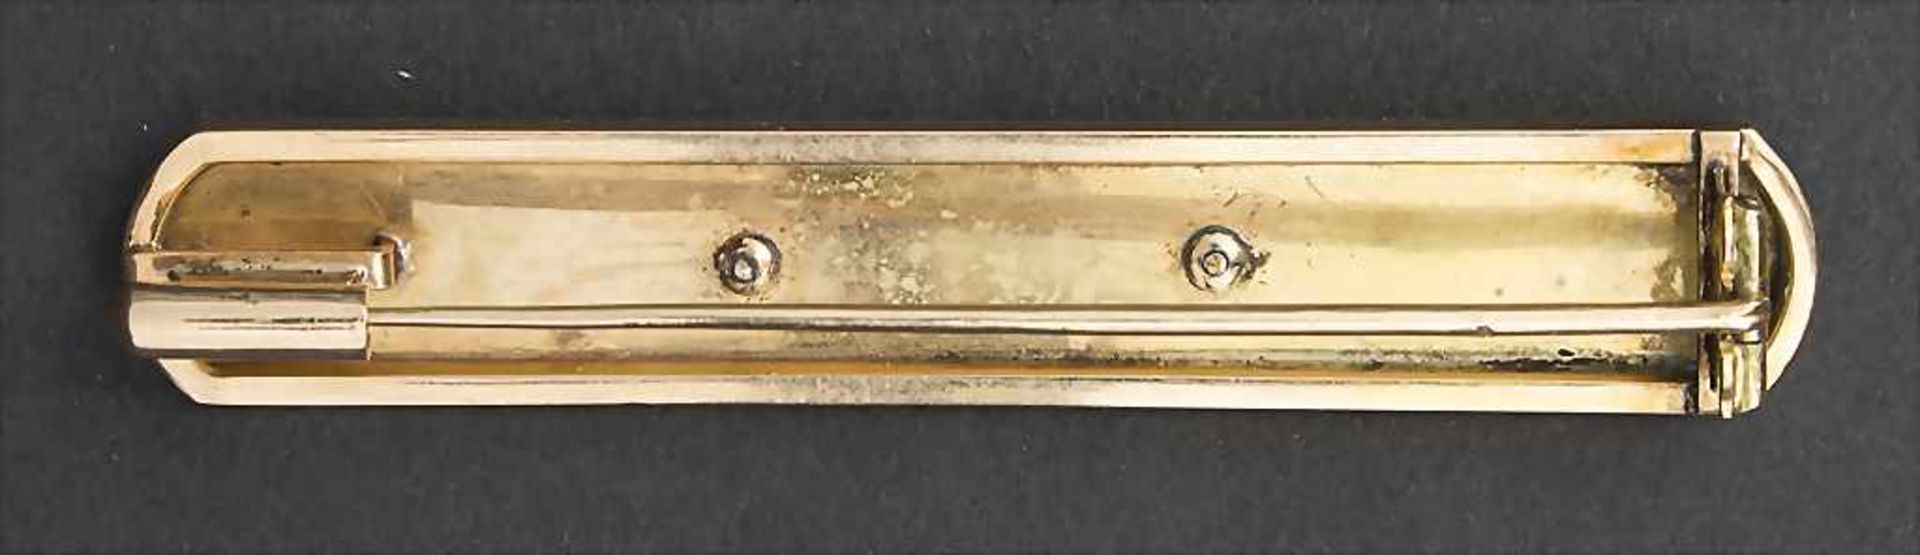 Empire Brosche / An Empire brooch, um 1820Material: Gelbgold / Rotgold 750/000 18 Kt, mit Perlen, - Bild 2 aus 2